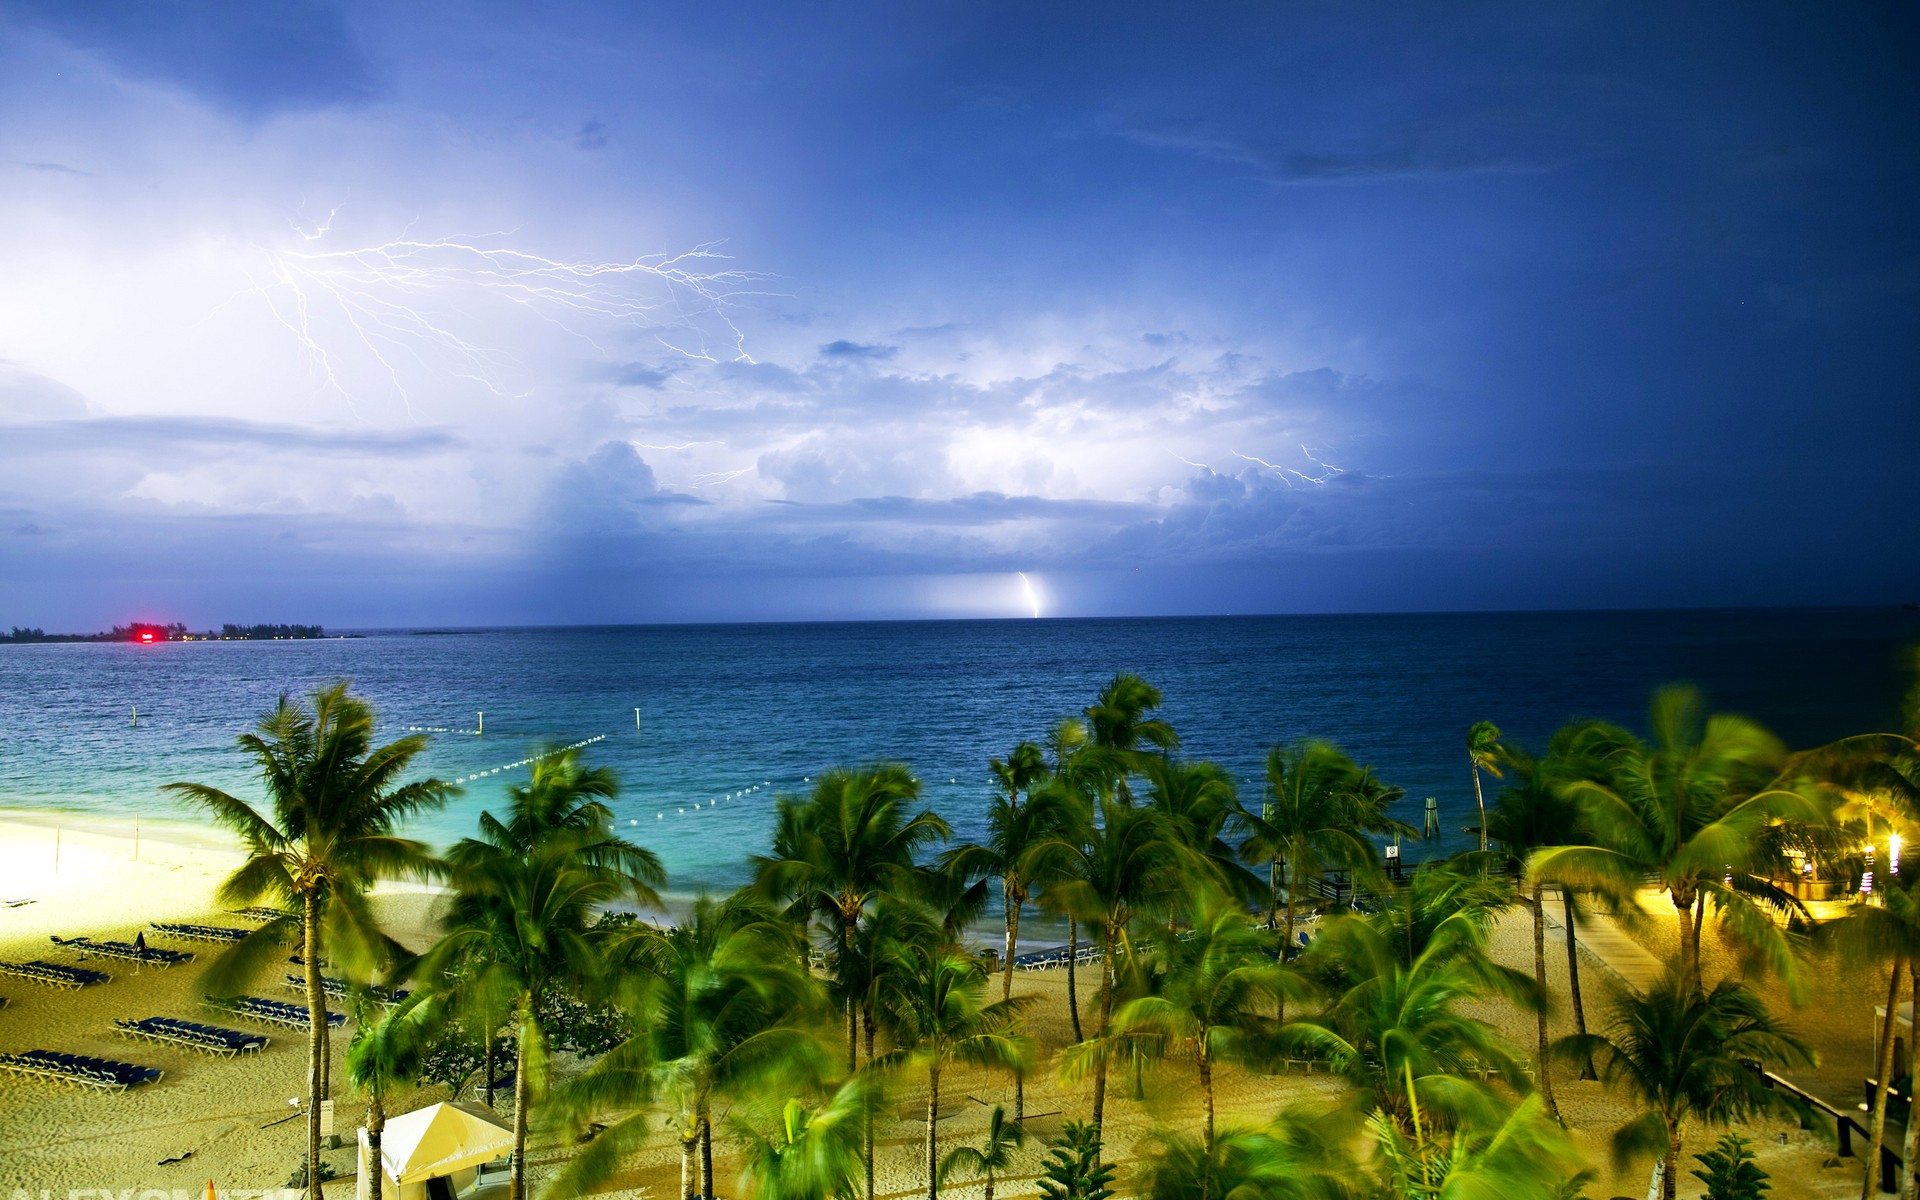 General 1920x1200 clouds lightning storm horizon Bahamas tropical palm trees sea beach windy sand long exposure deck chairs sky